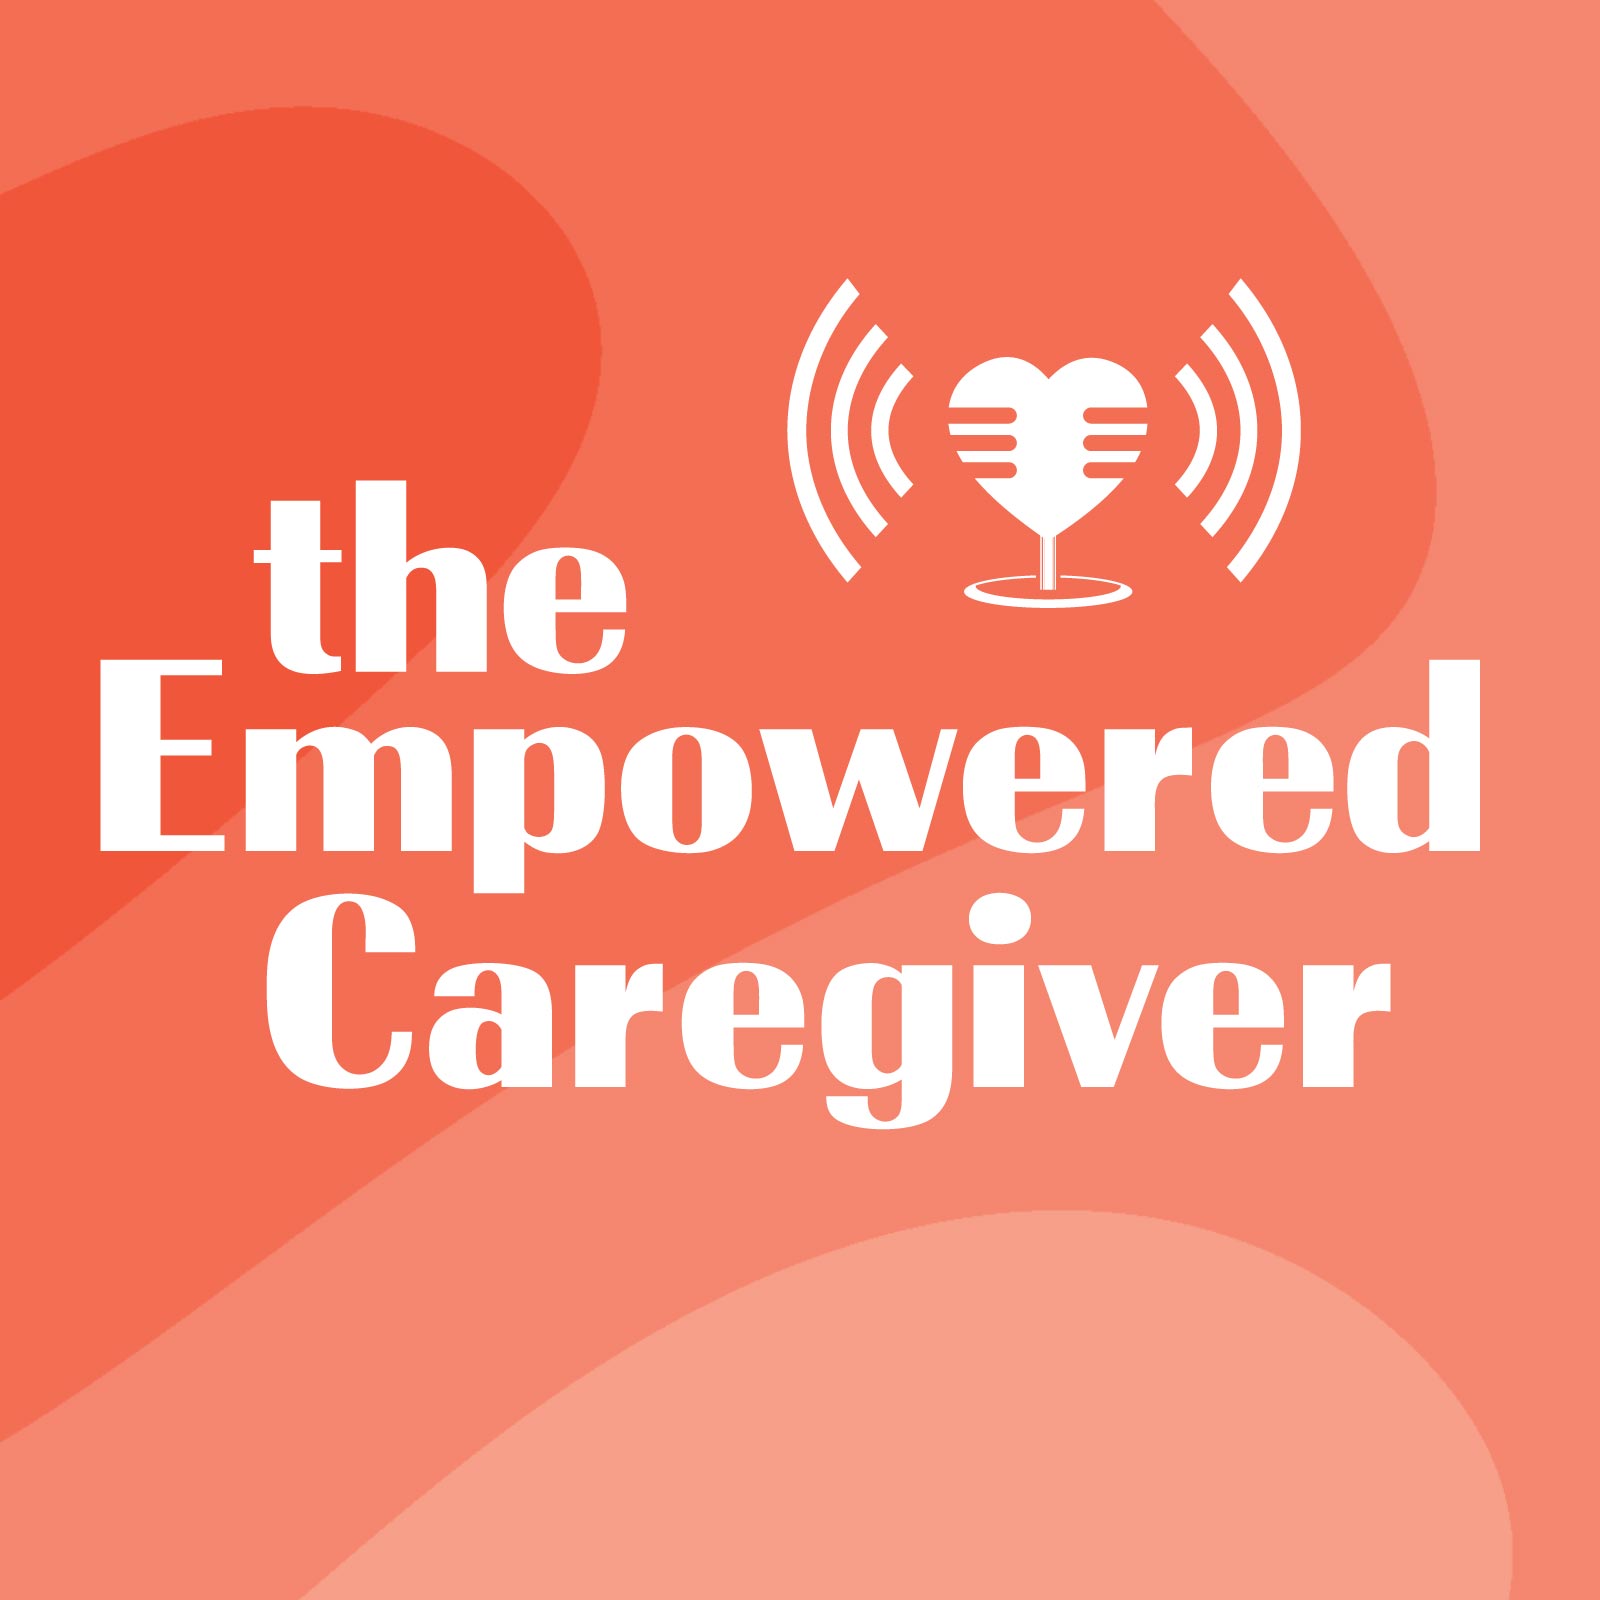 The Empowered Caregiver